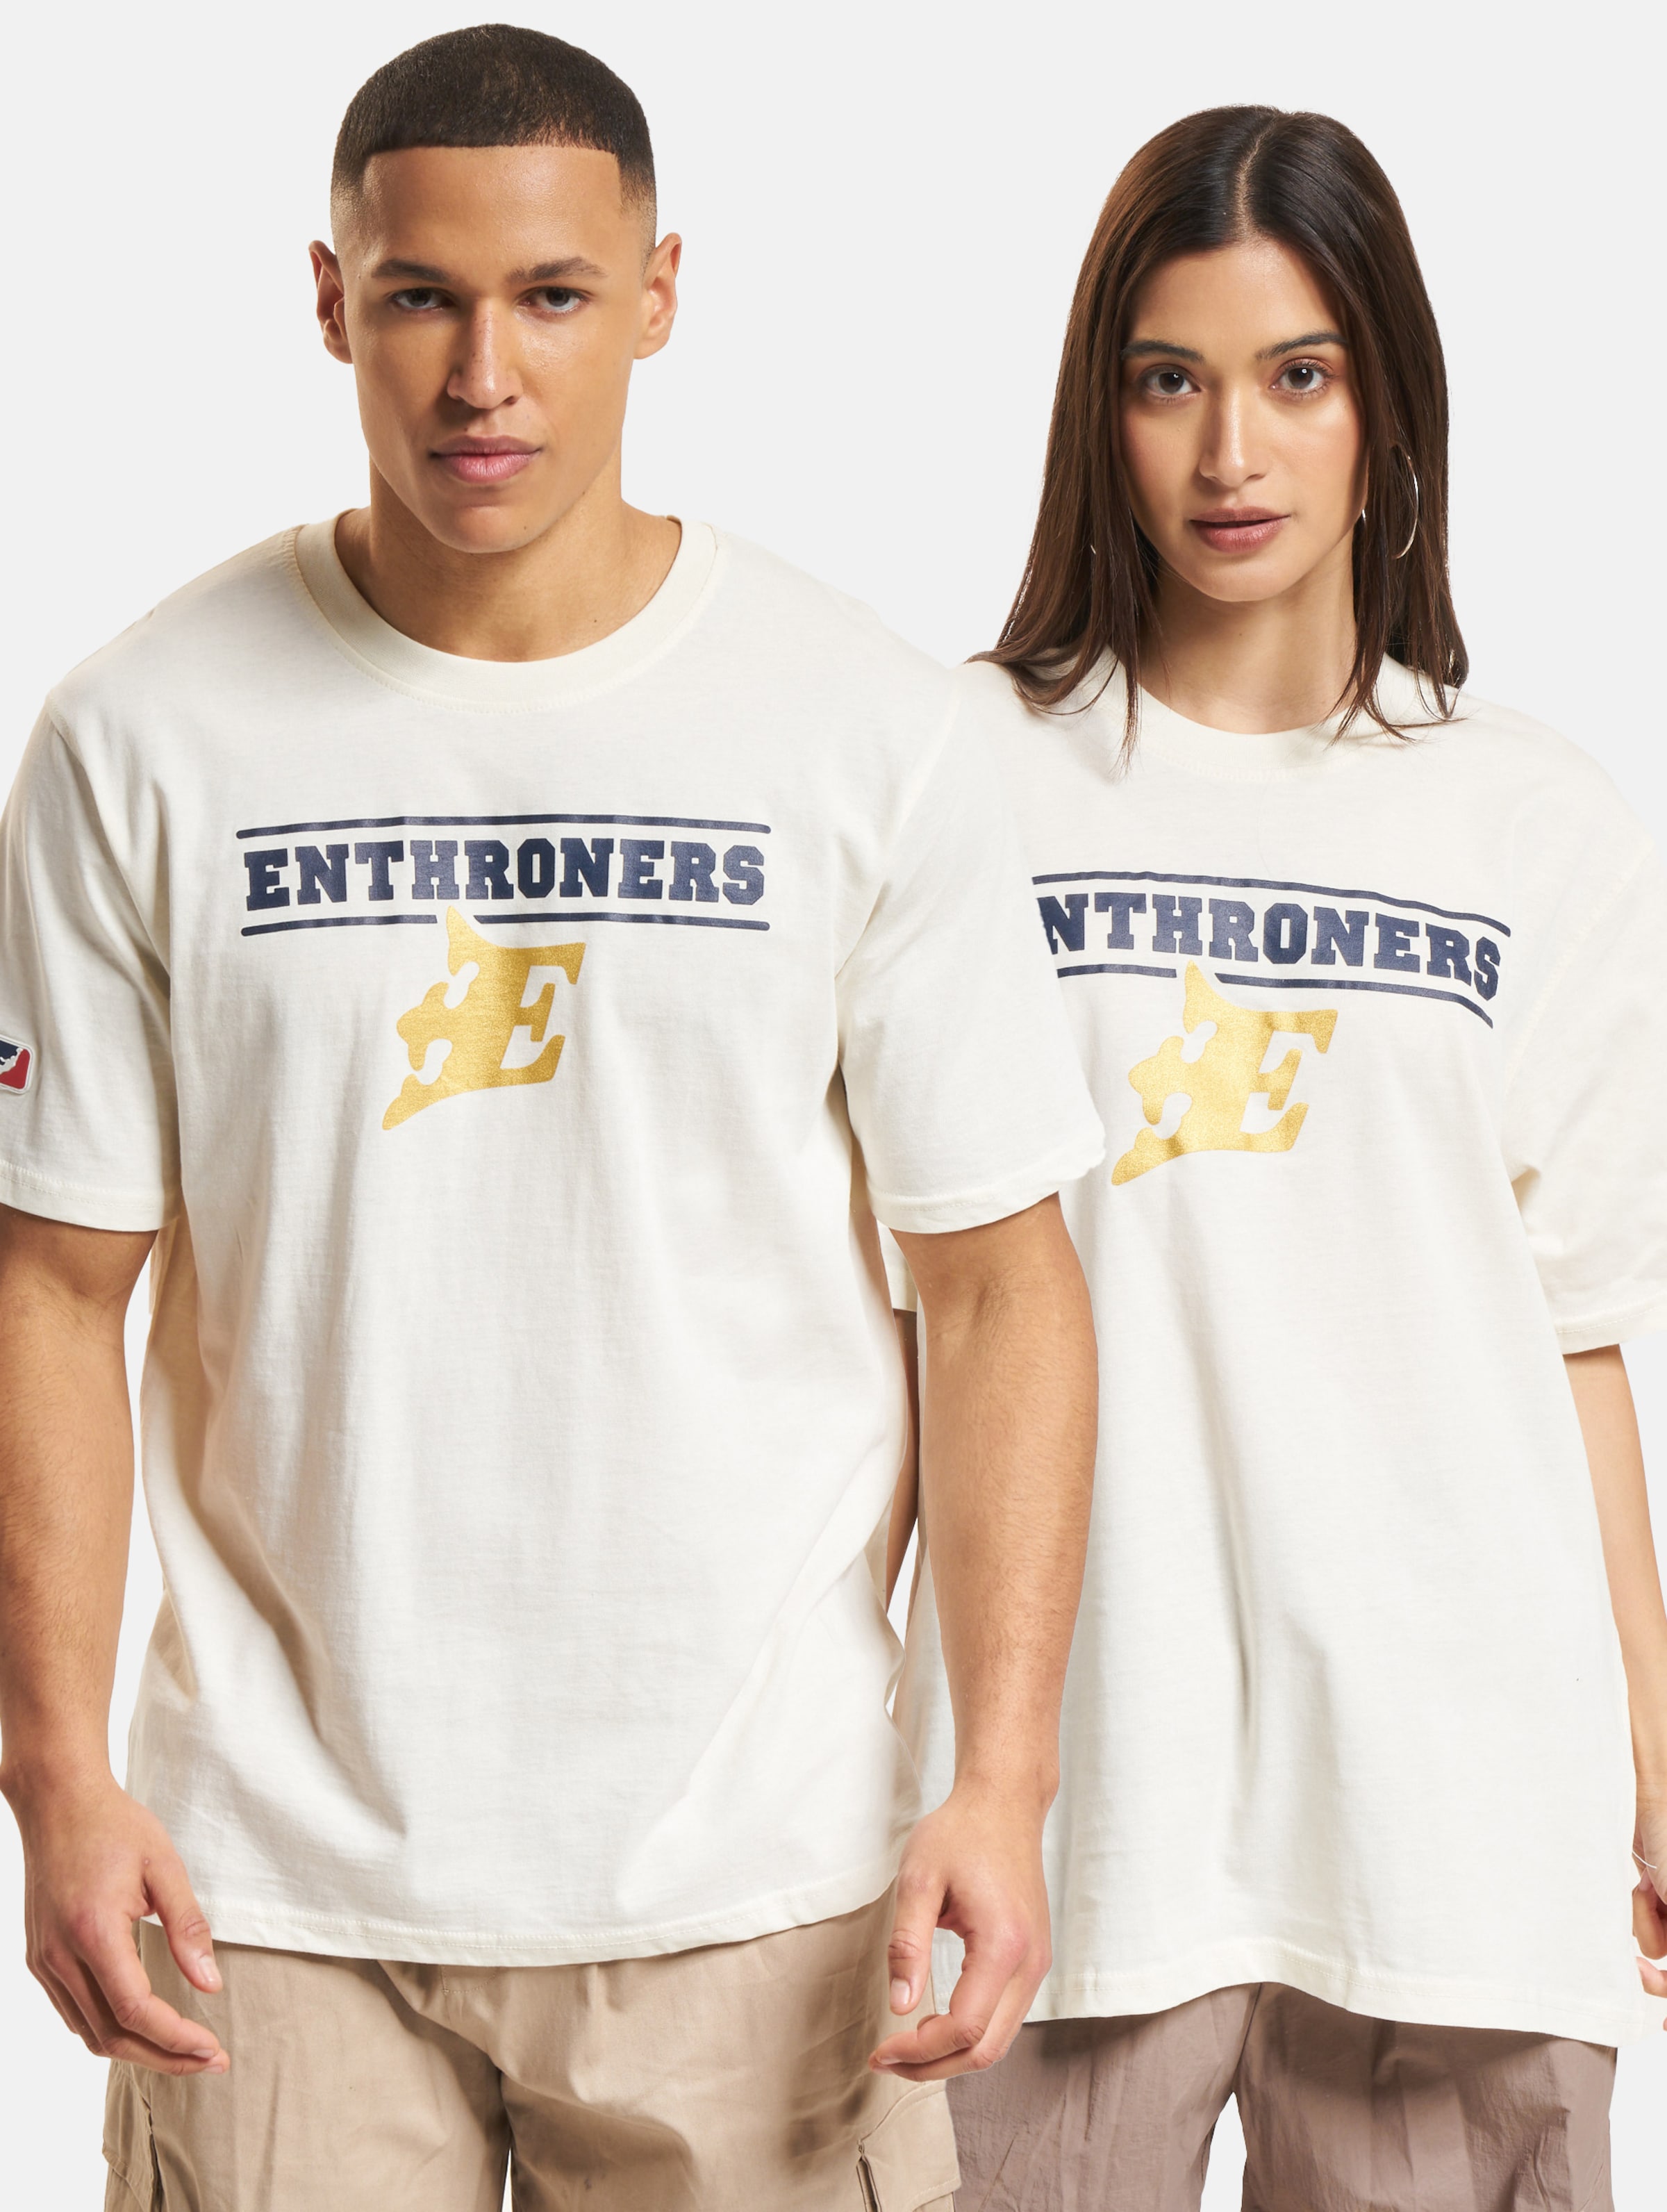 European League Of Football ELF Fehérvár Enthroners 2 T-Shirt Unisex op kleur beige, Maat M